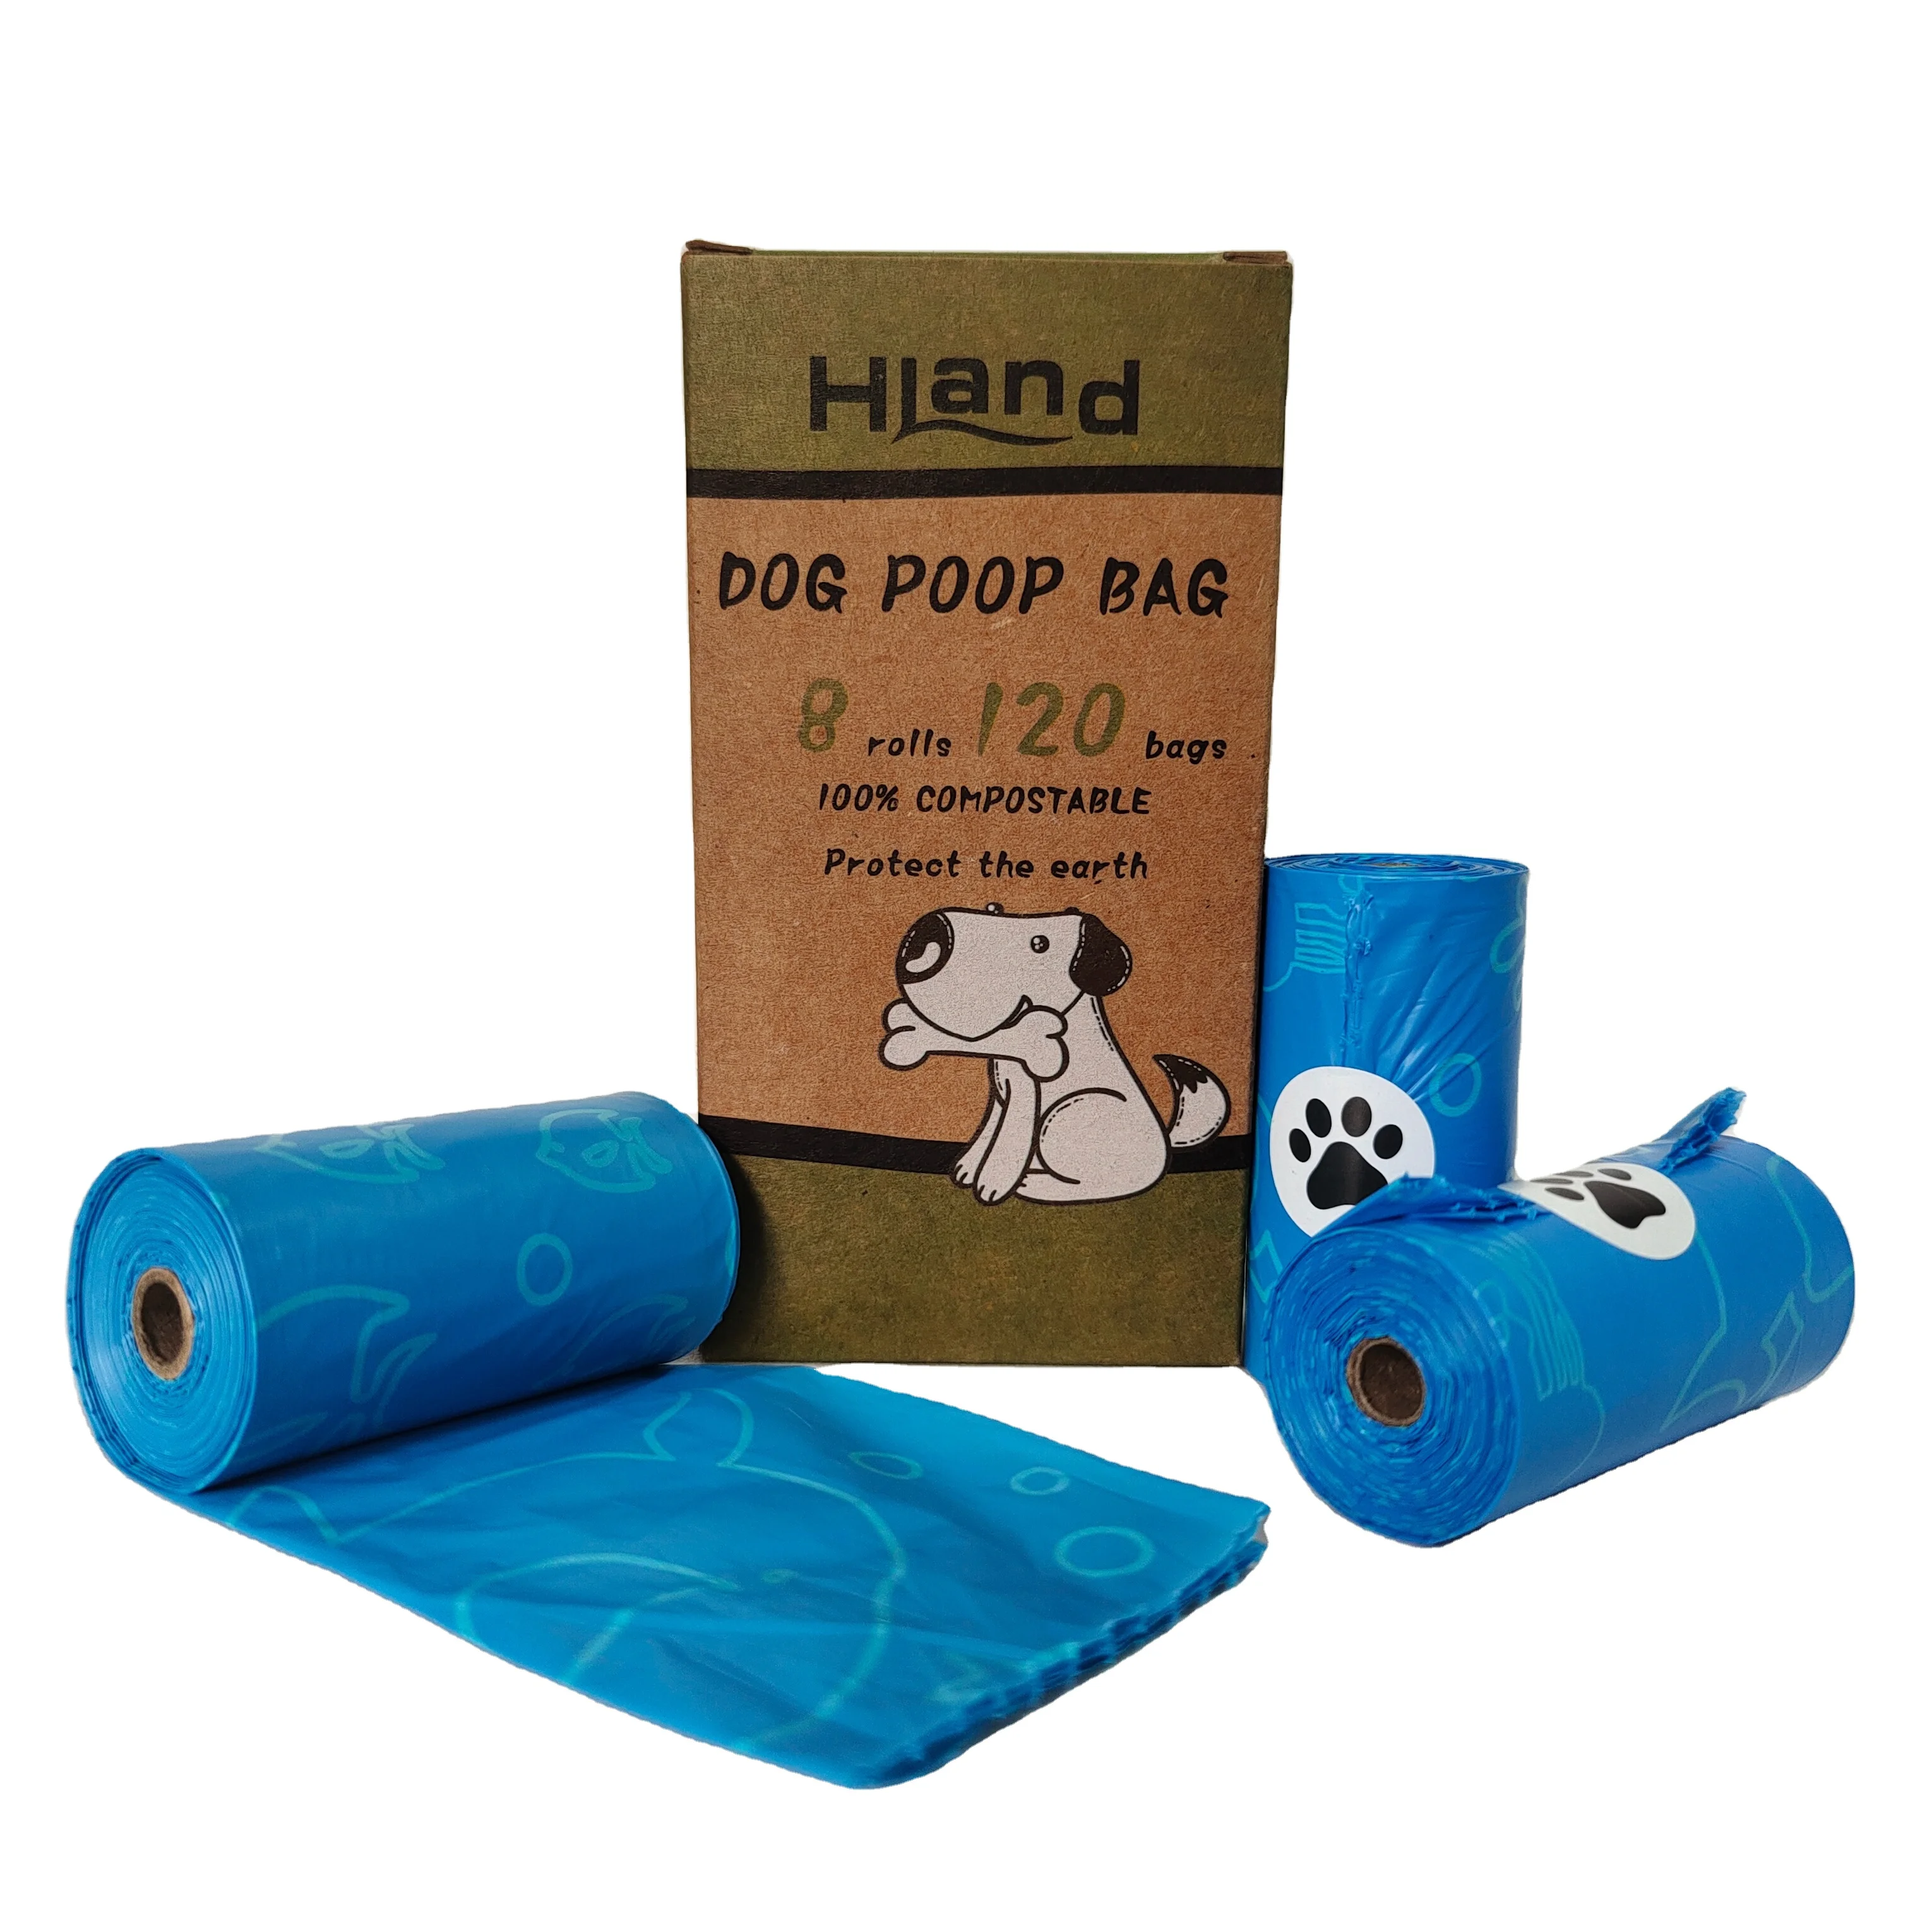 

Quality Guarantee Blue 100% Biodegradable Dog Poop Bag Pet Feces Bag Compostable Poop Bag on Roll, Blue with dolphins